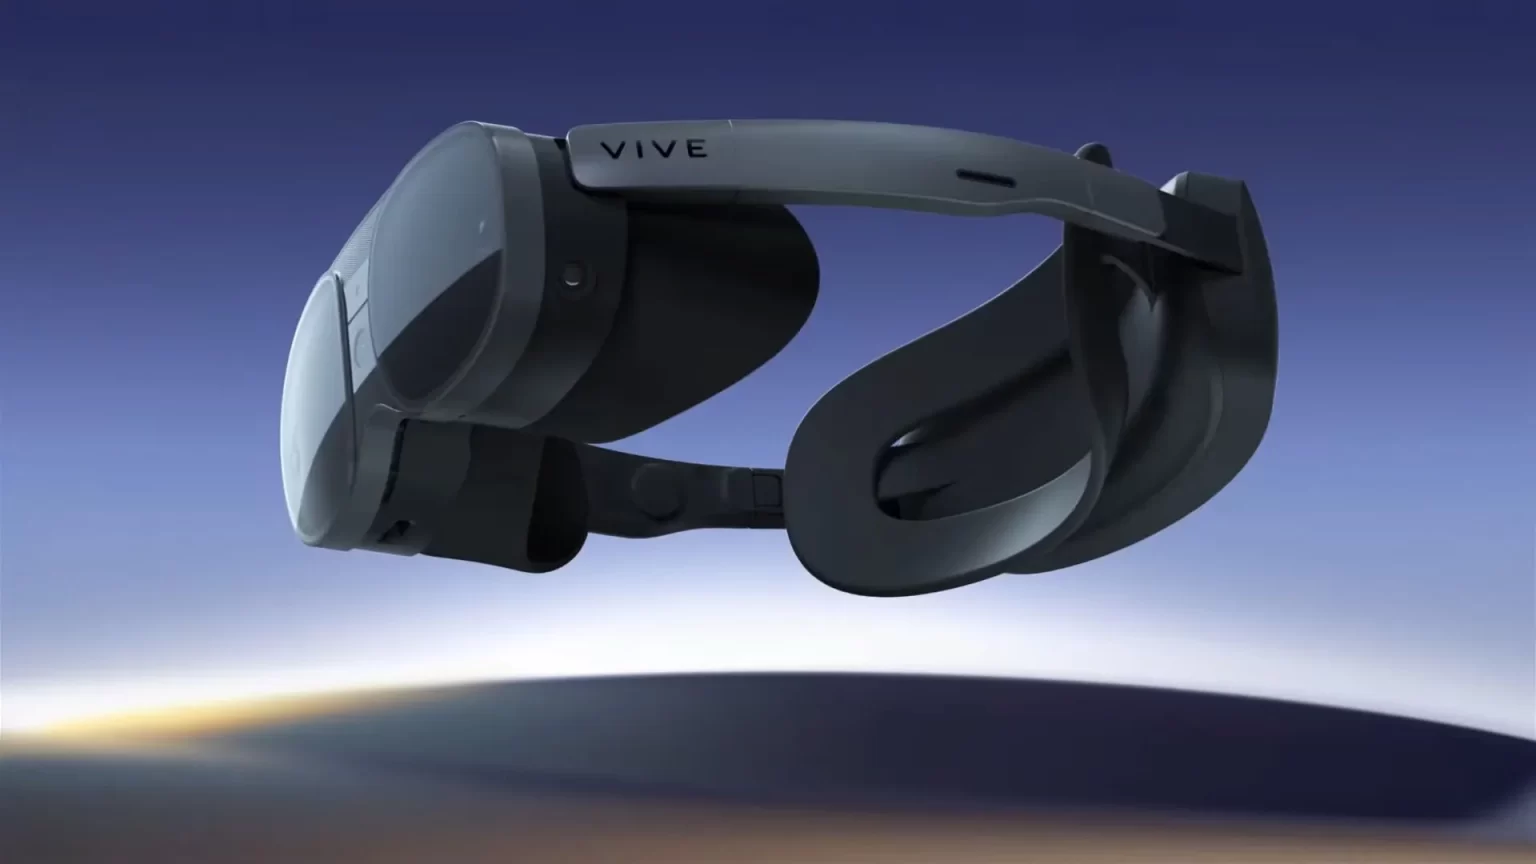 HTCViveXRElite 010523 1536x864 - HTC launches Vive XR Elite AR/VR headset